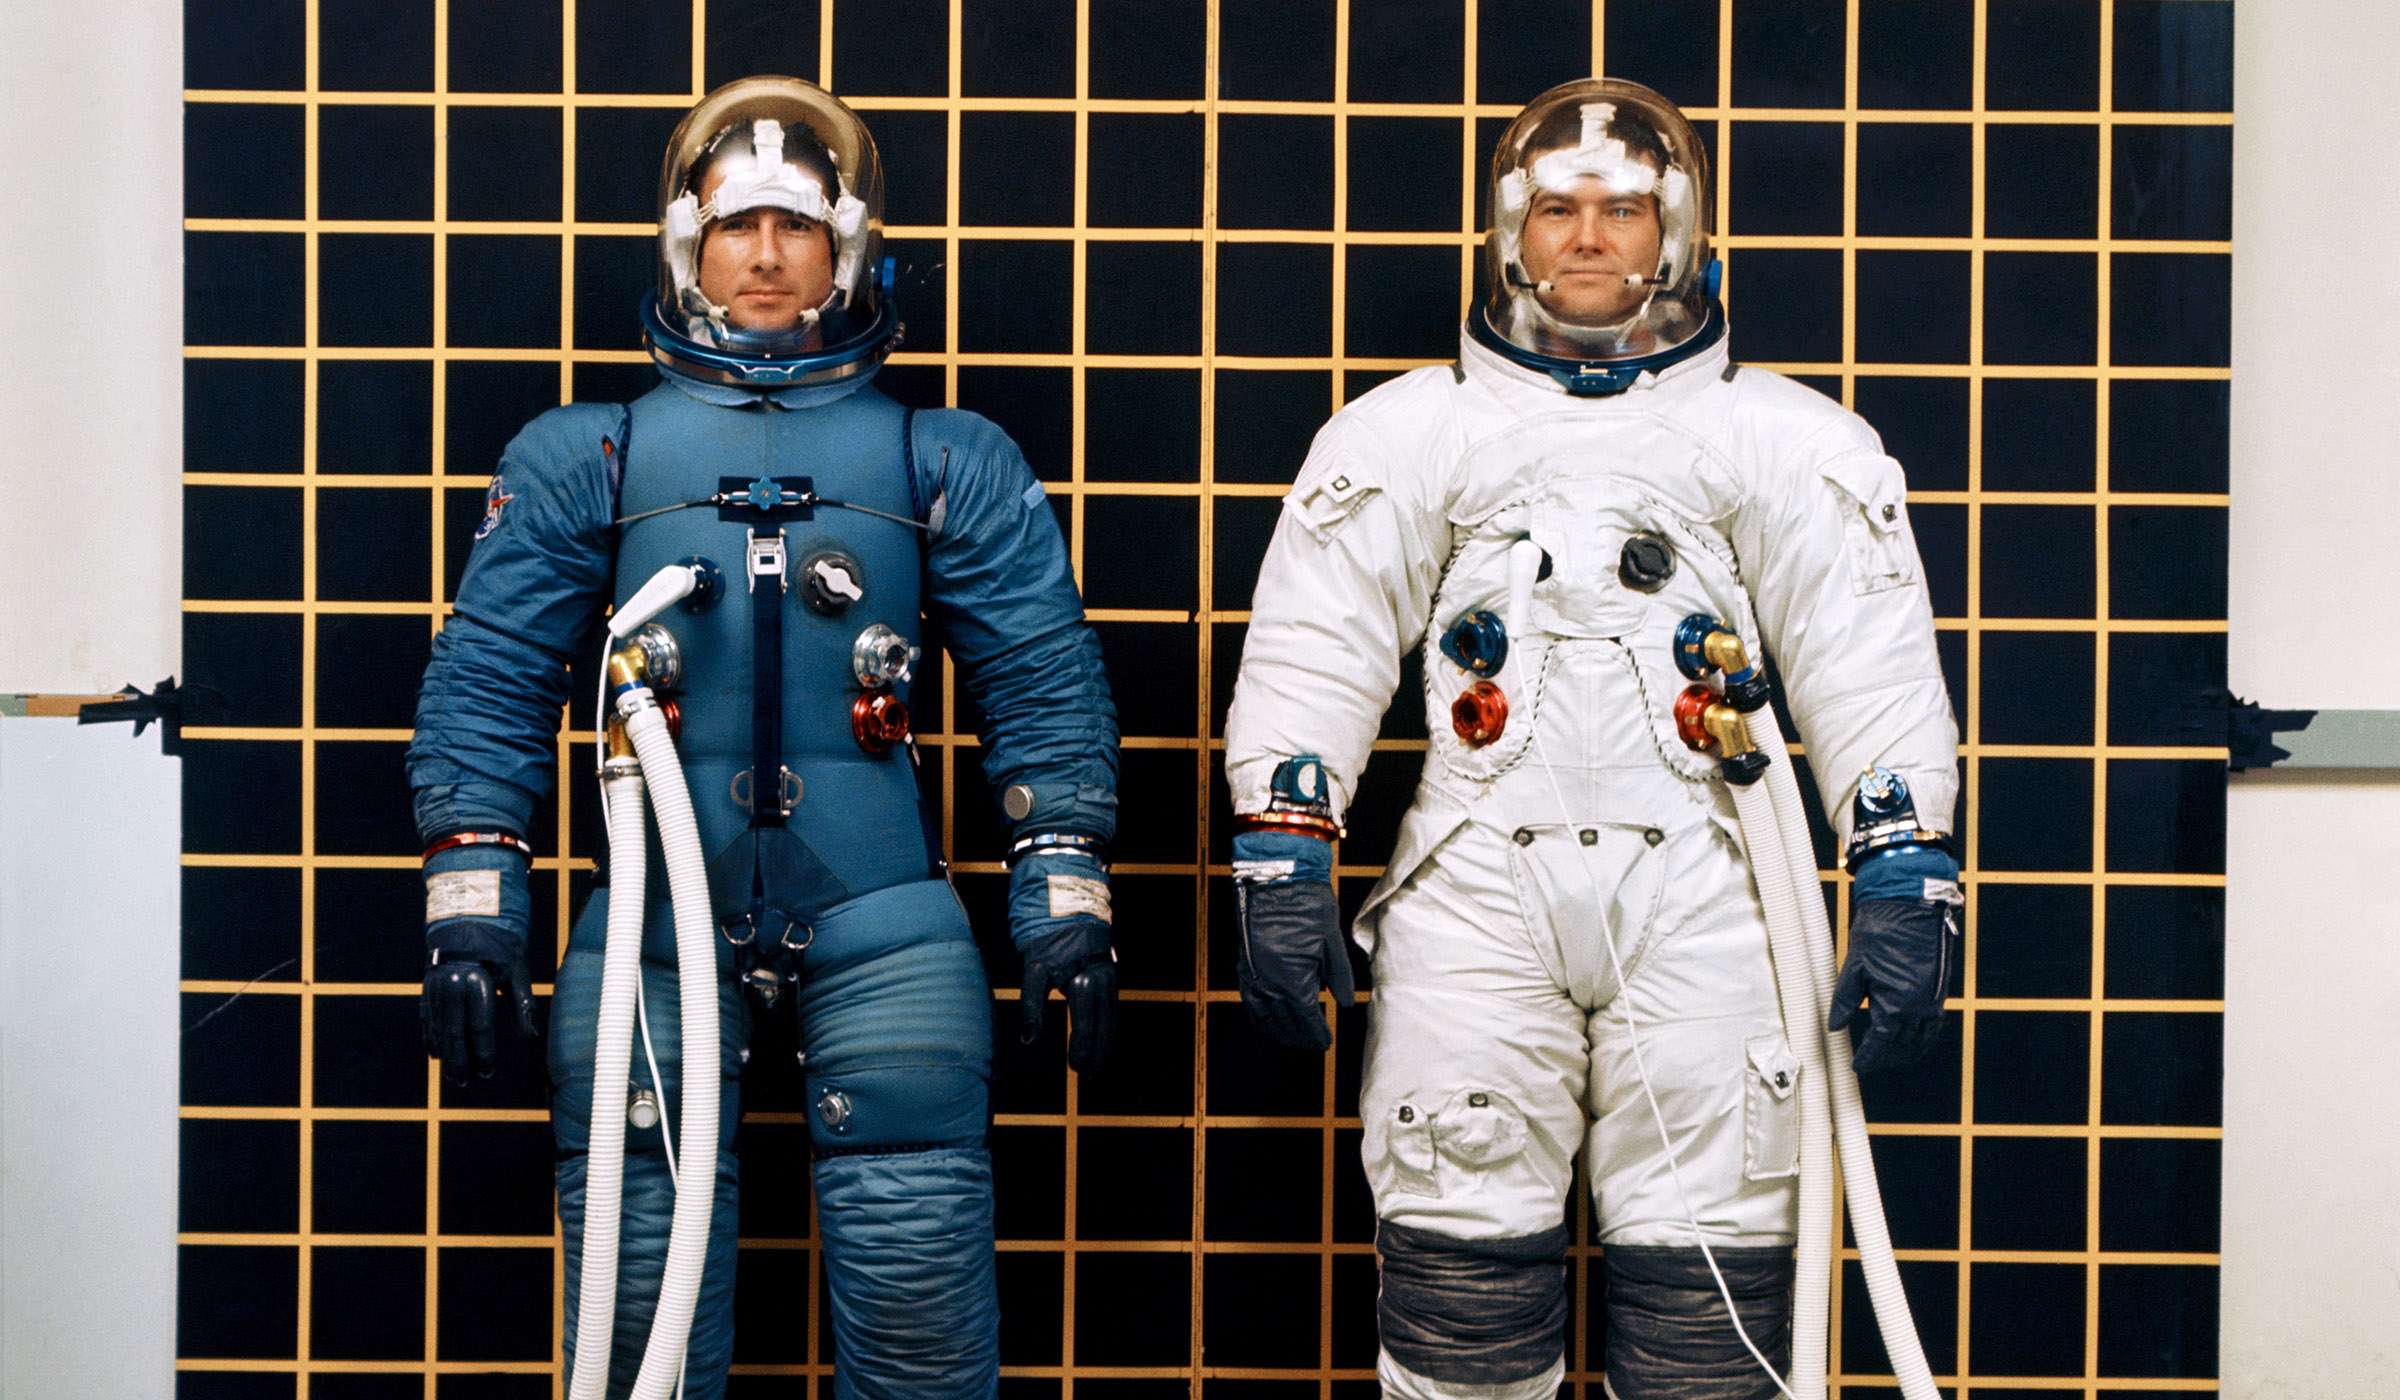 Part Seven: Space Suits for Apollo